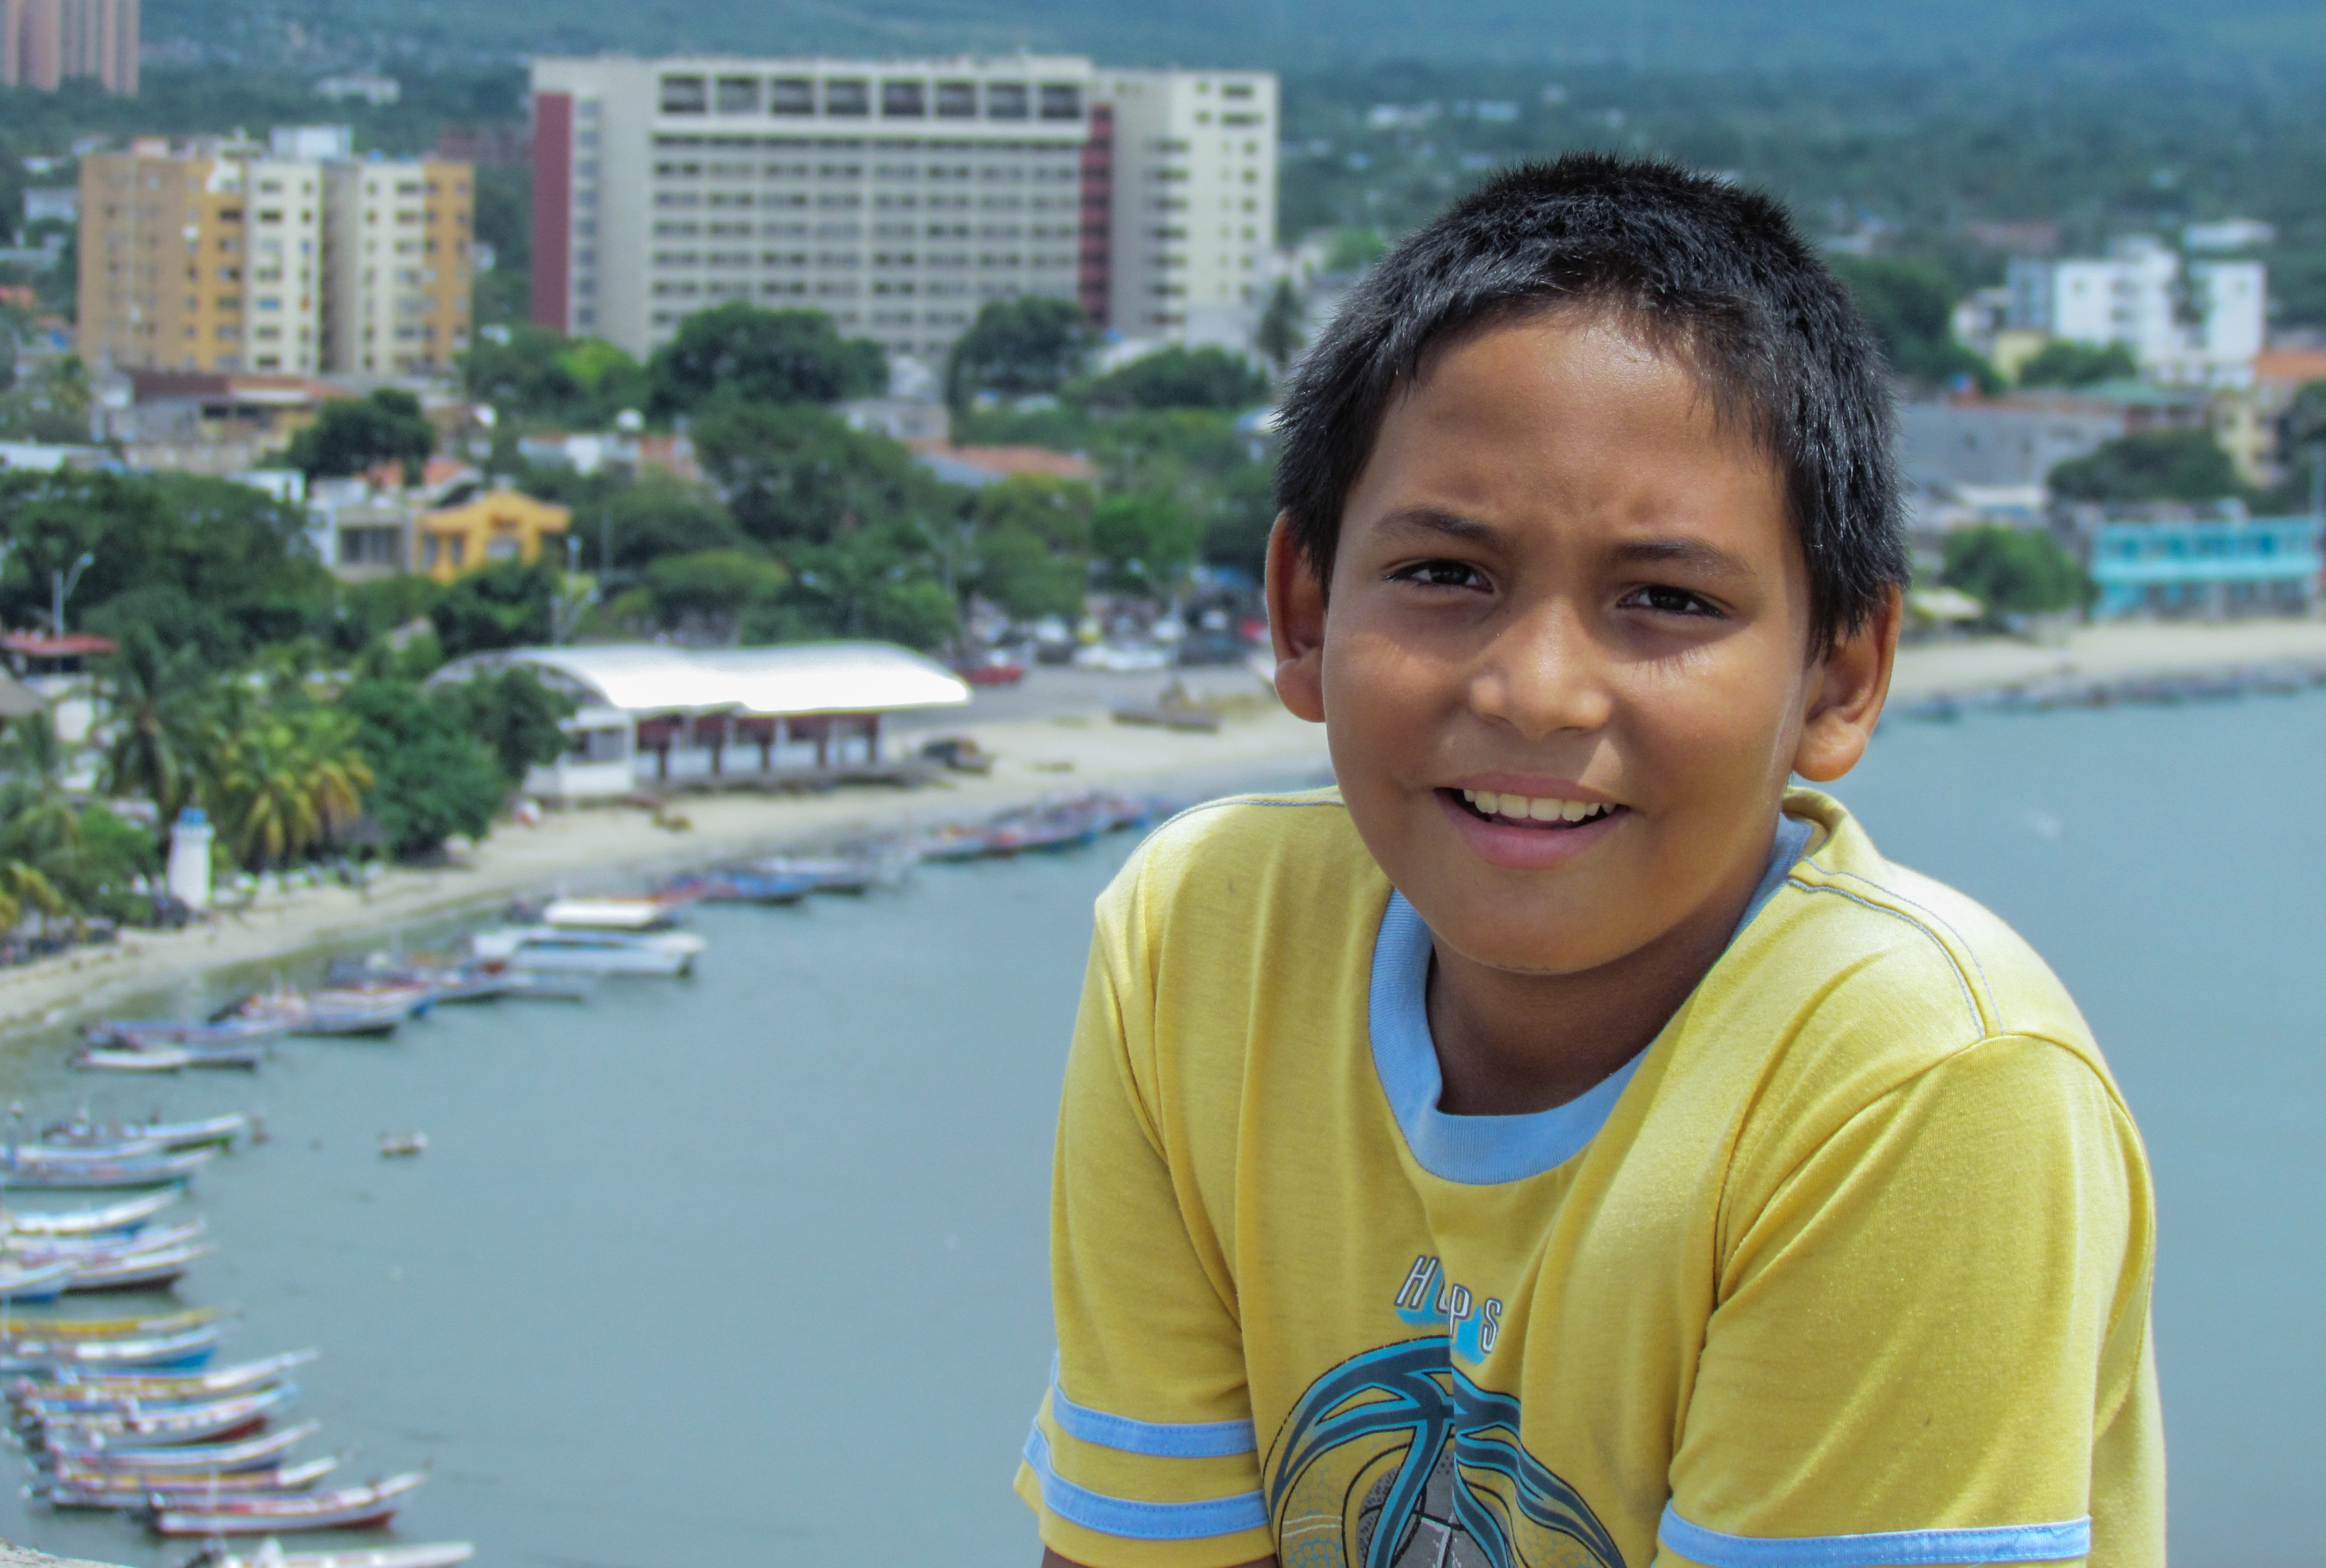 Boy from Margarita island, Venezuela